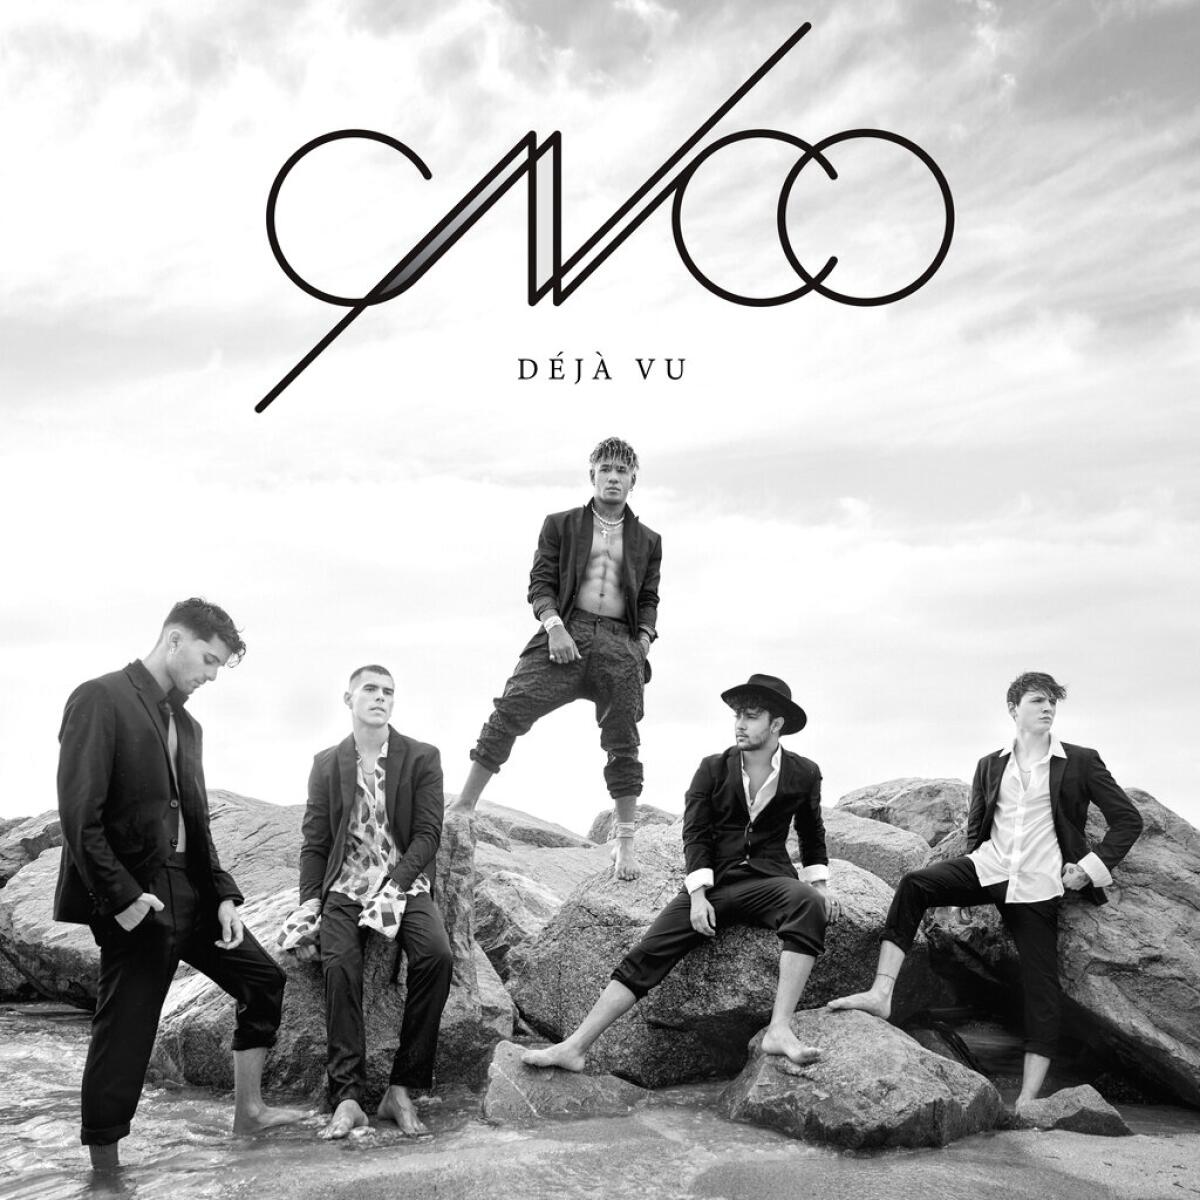 La portada del álbum "Déjà vu'" de CNCO en una imagen proporcionada por Sony Latin.